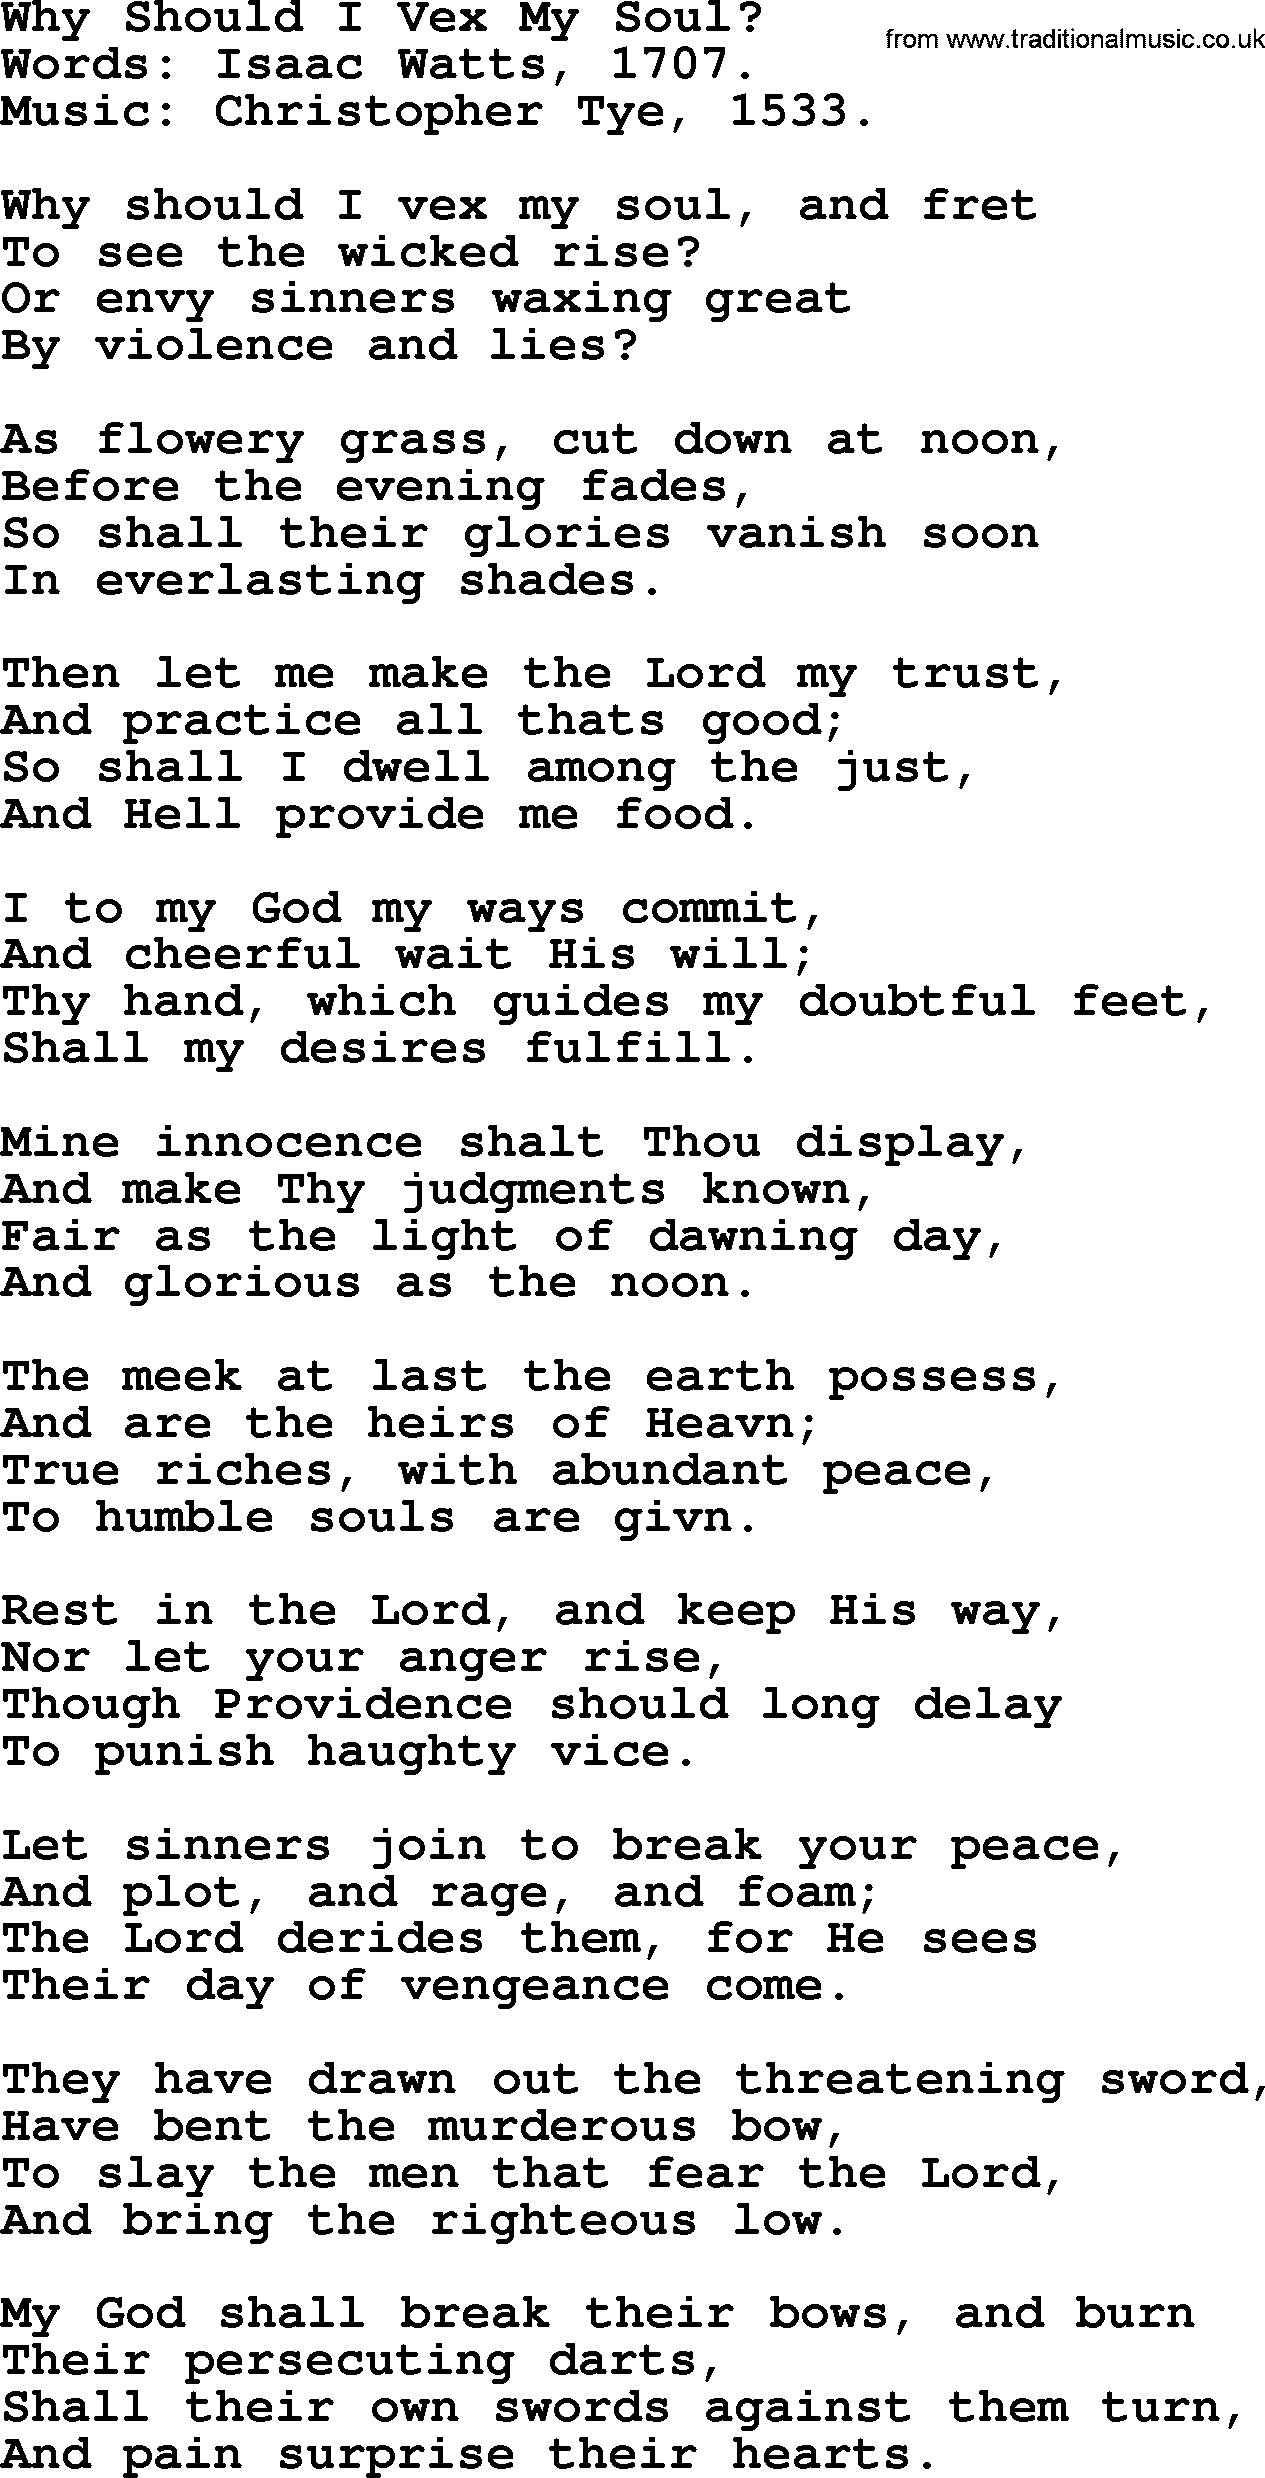 Isaac Watts Christian hymn: Why Should I Vex My Soul_- lyricss